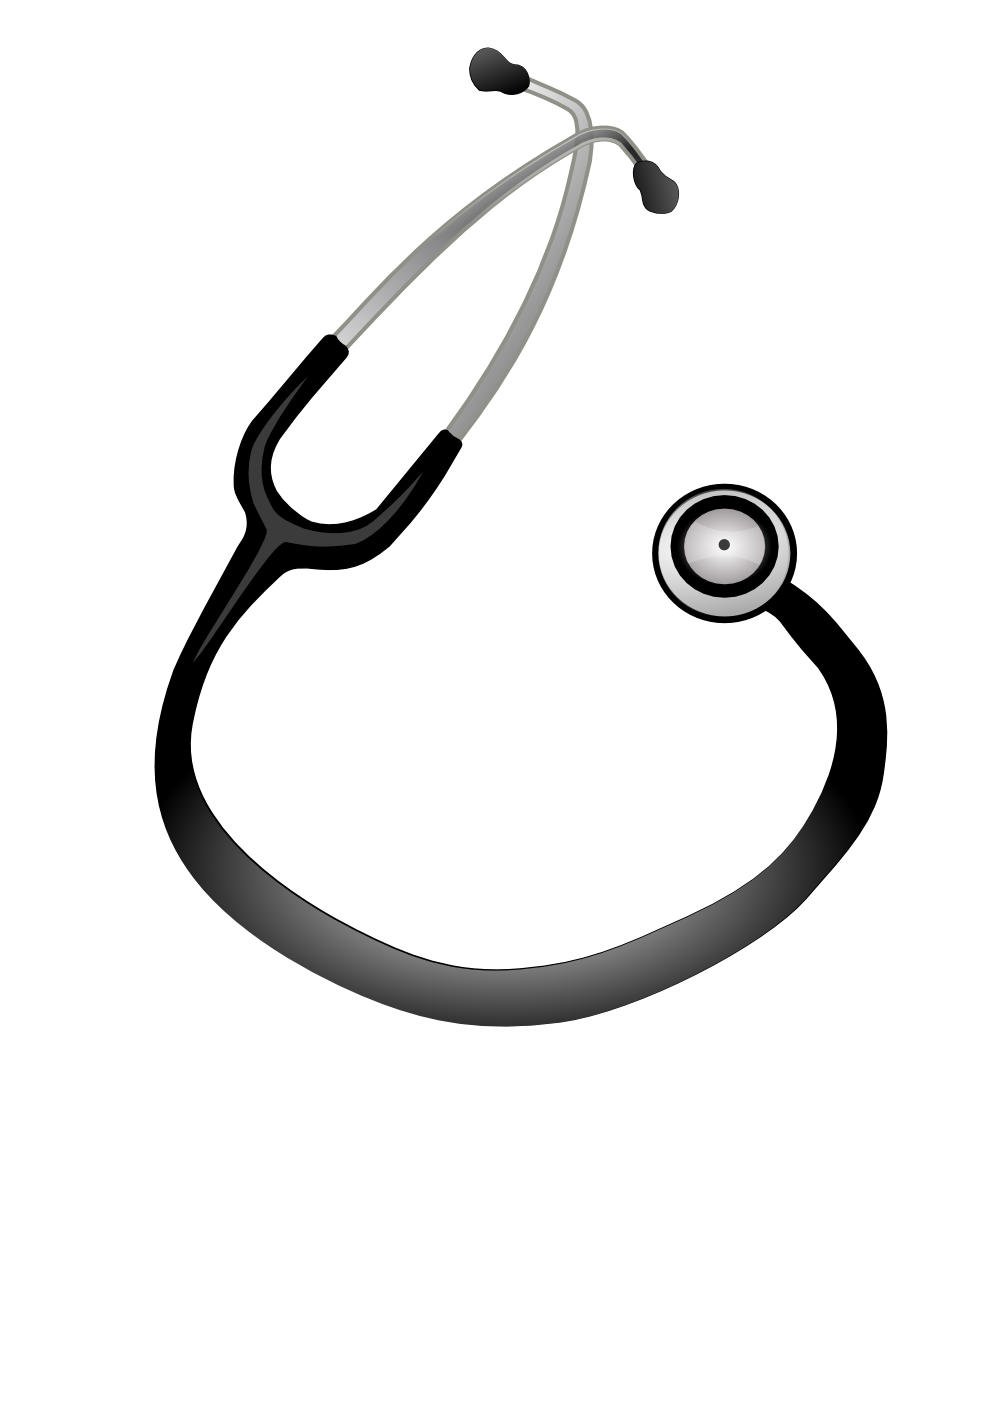 medicine clipart stethoscope